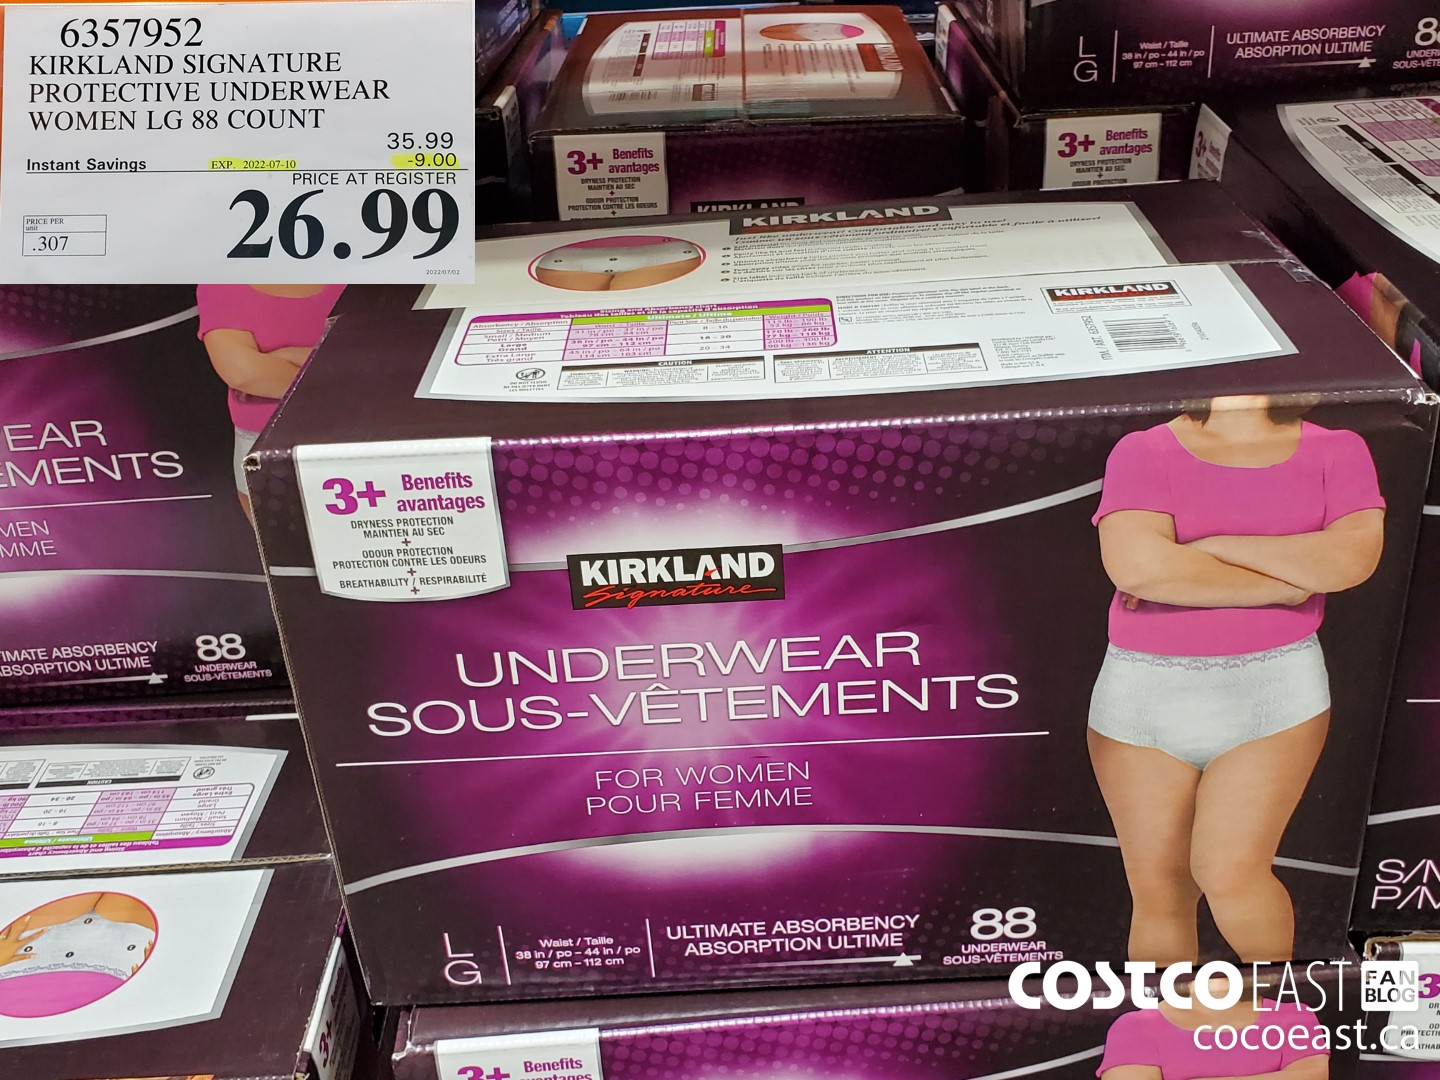 Kirkland Signature Women's Protective Underwear